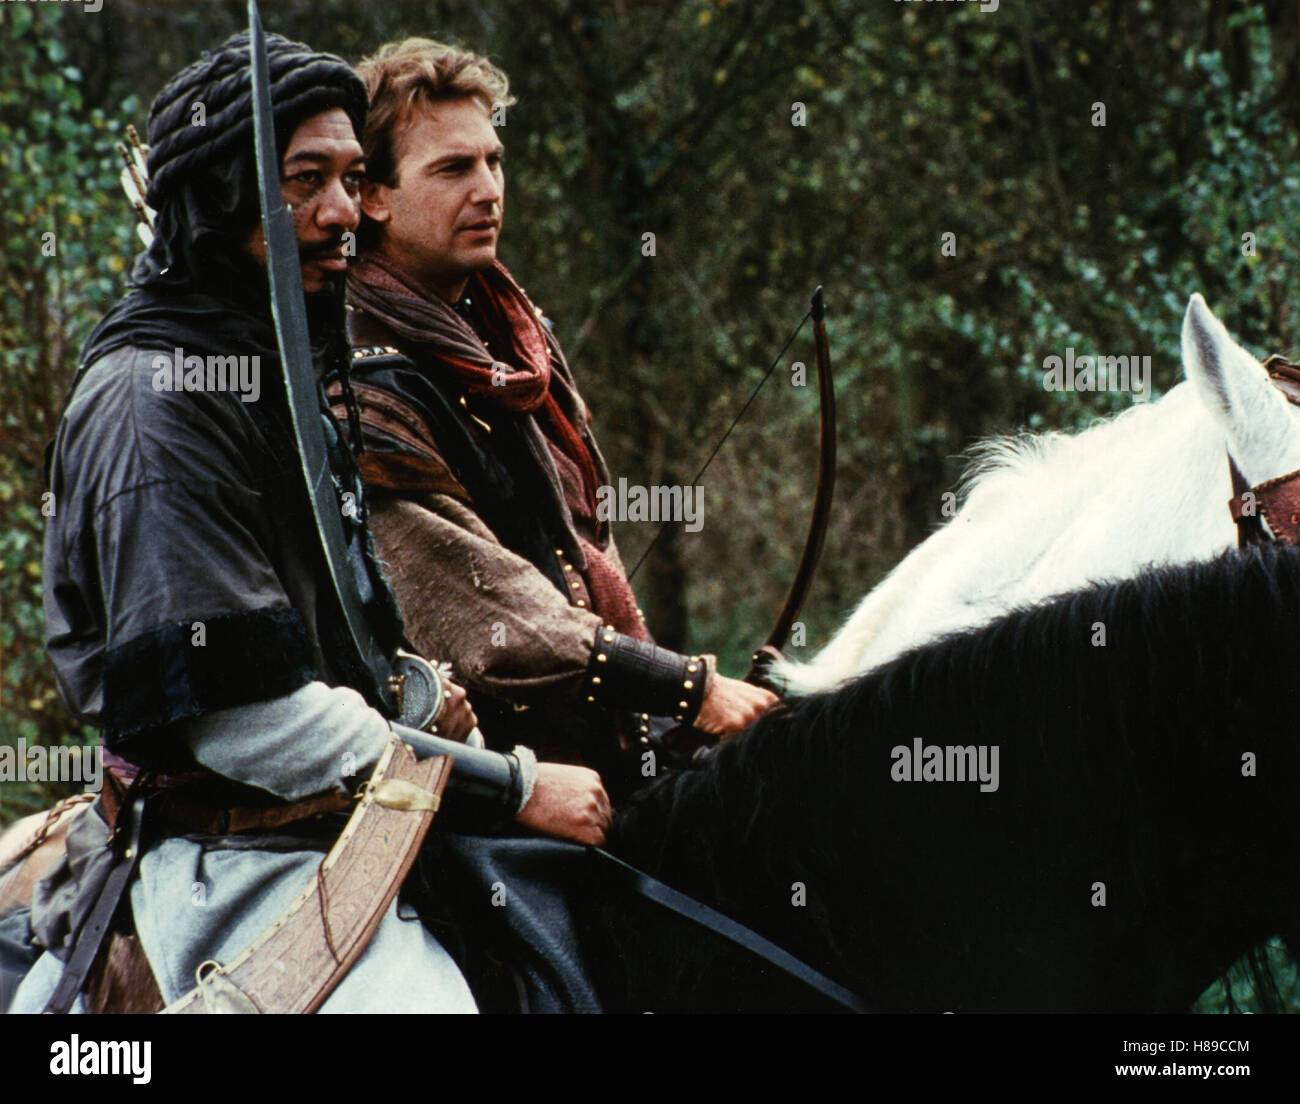 Robin Hood - König der Diebe, (ROBIN HOOD: PRINCE OF THIEVES) USA 1991, Regie: Kevin Reynolds, MORGAN FREEMAN, KEVIN COSTNER, Stichwort: Reiter, Säbel Stock Photo